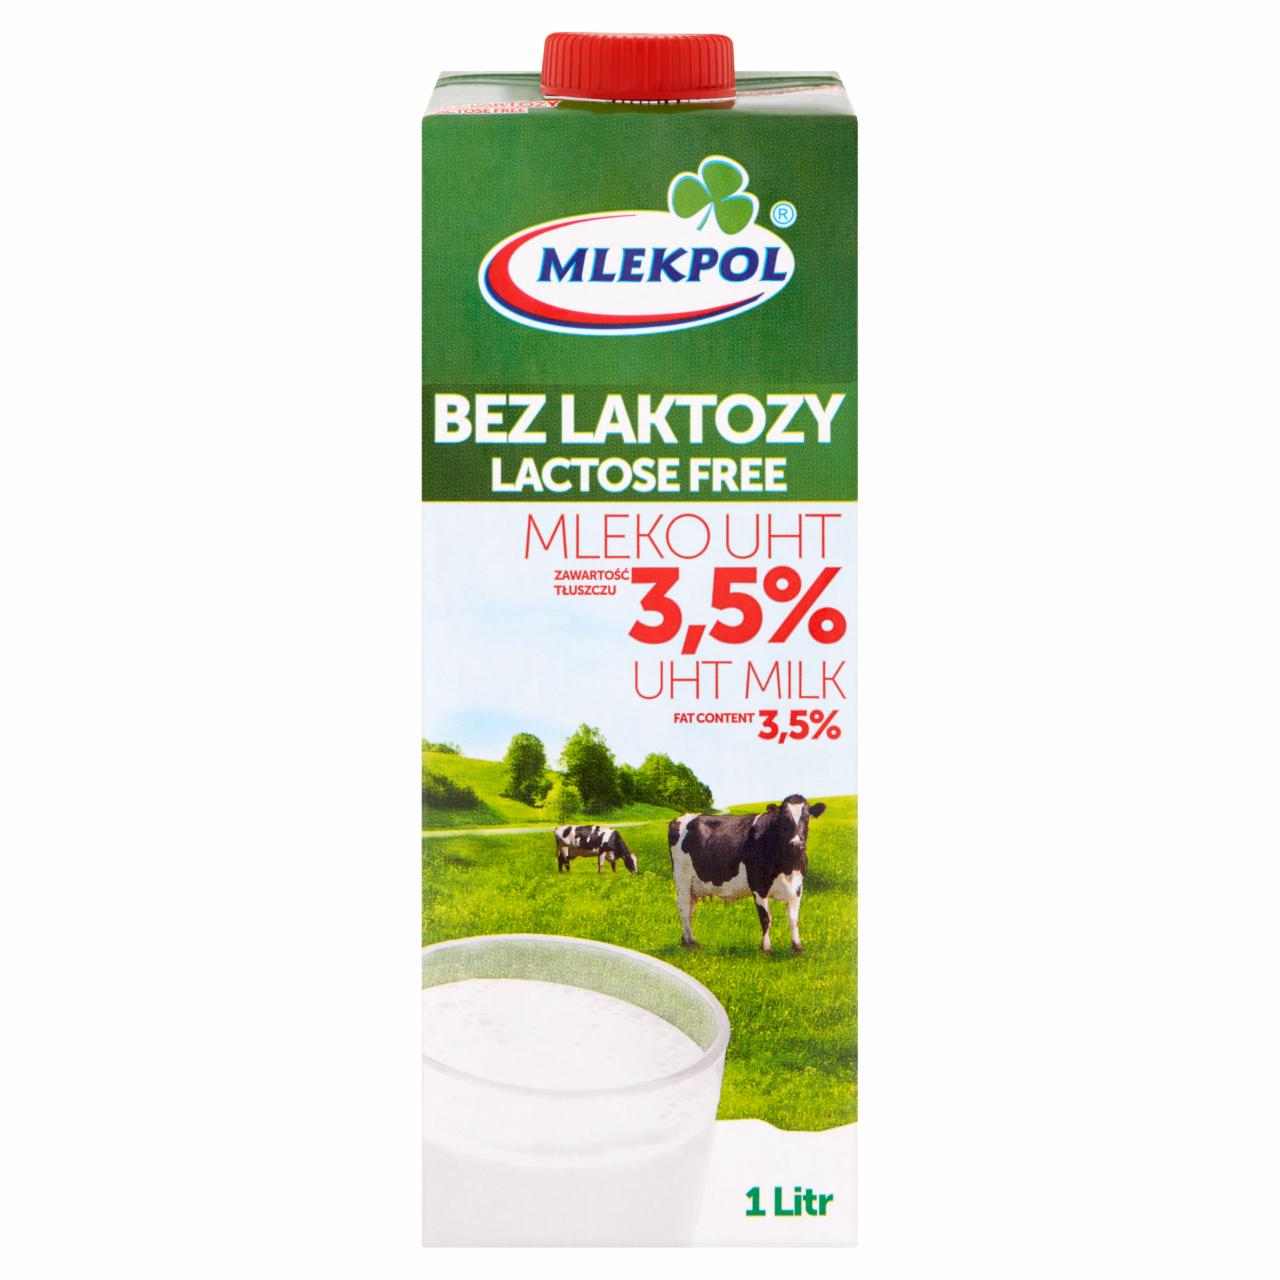 Zdjęcia - Mlekpol Bez laktozy Mleko UHT 3,5% 1 l